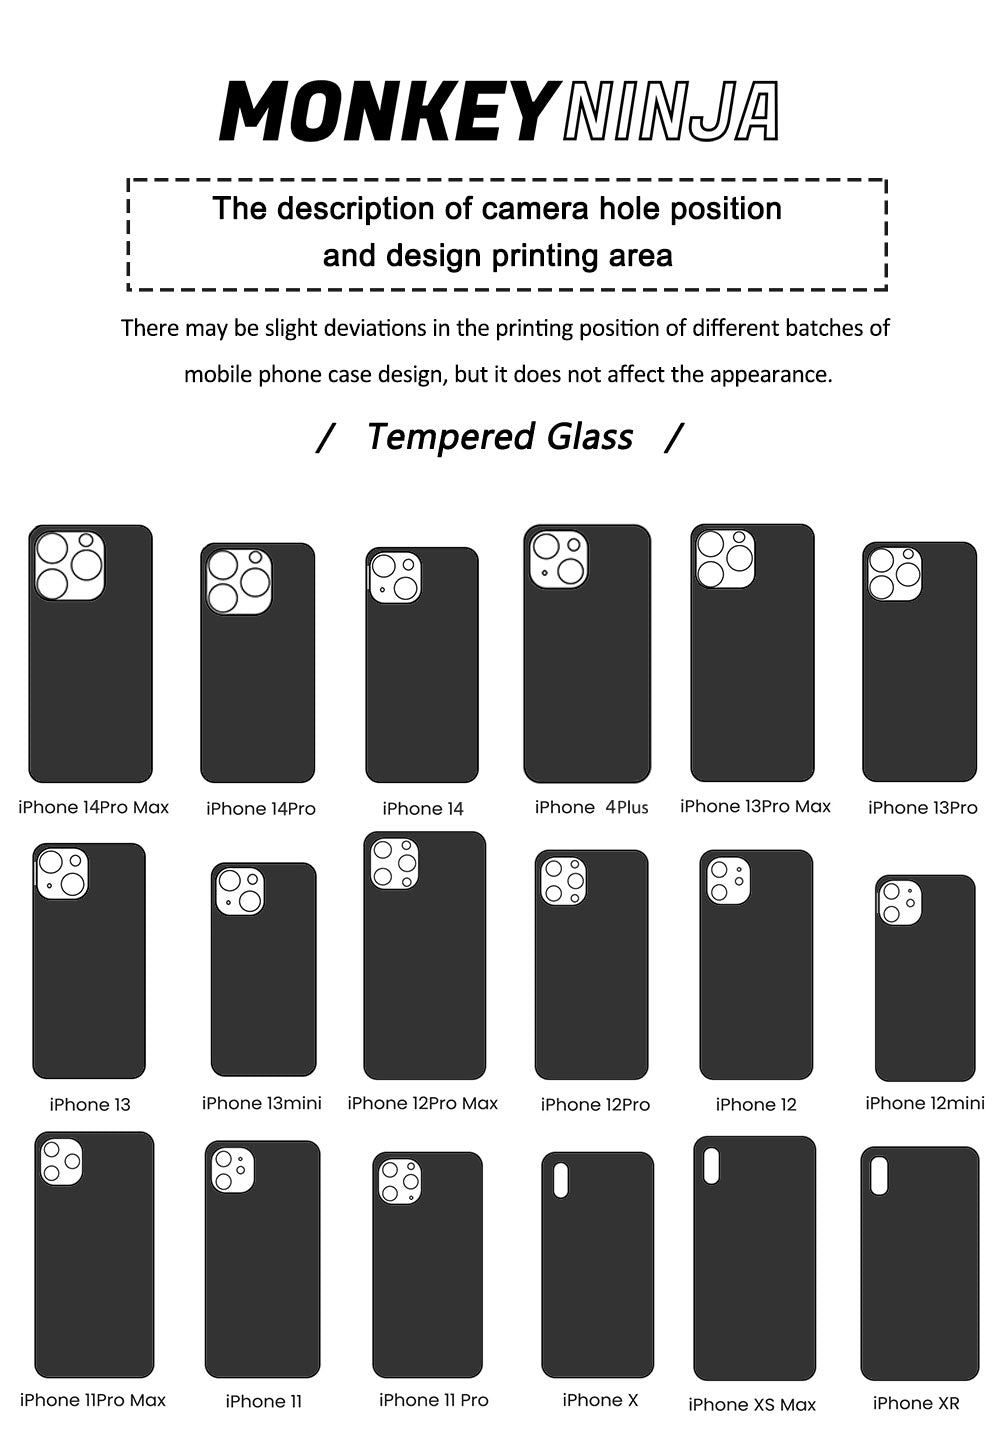 Madara Uchiha Mangekyou Sharingan Tempered Glass Soft Silicone iPhone Case